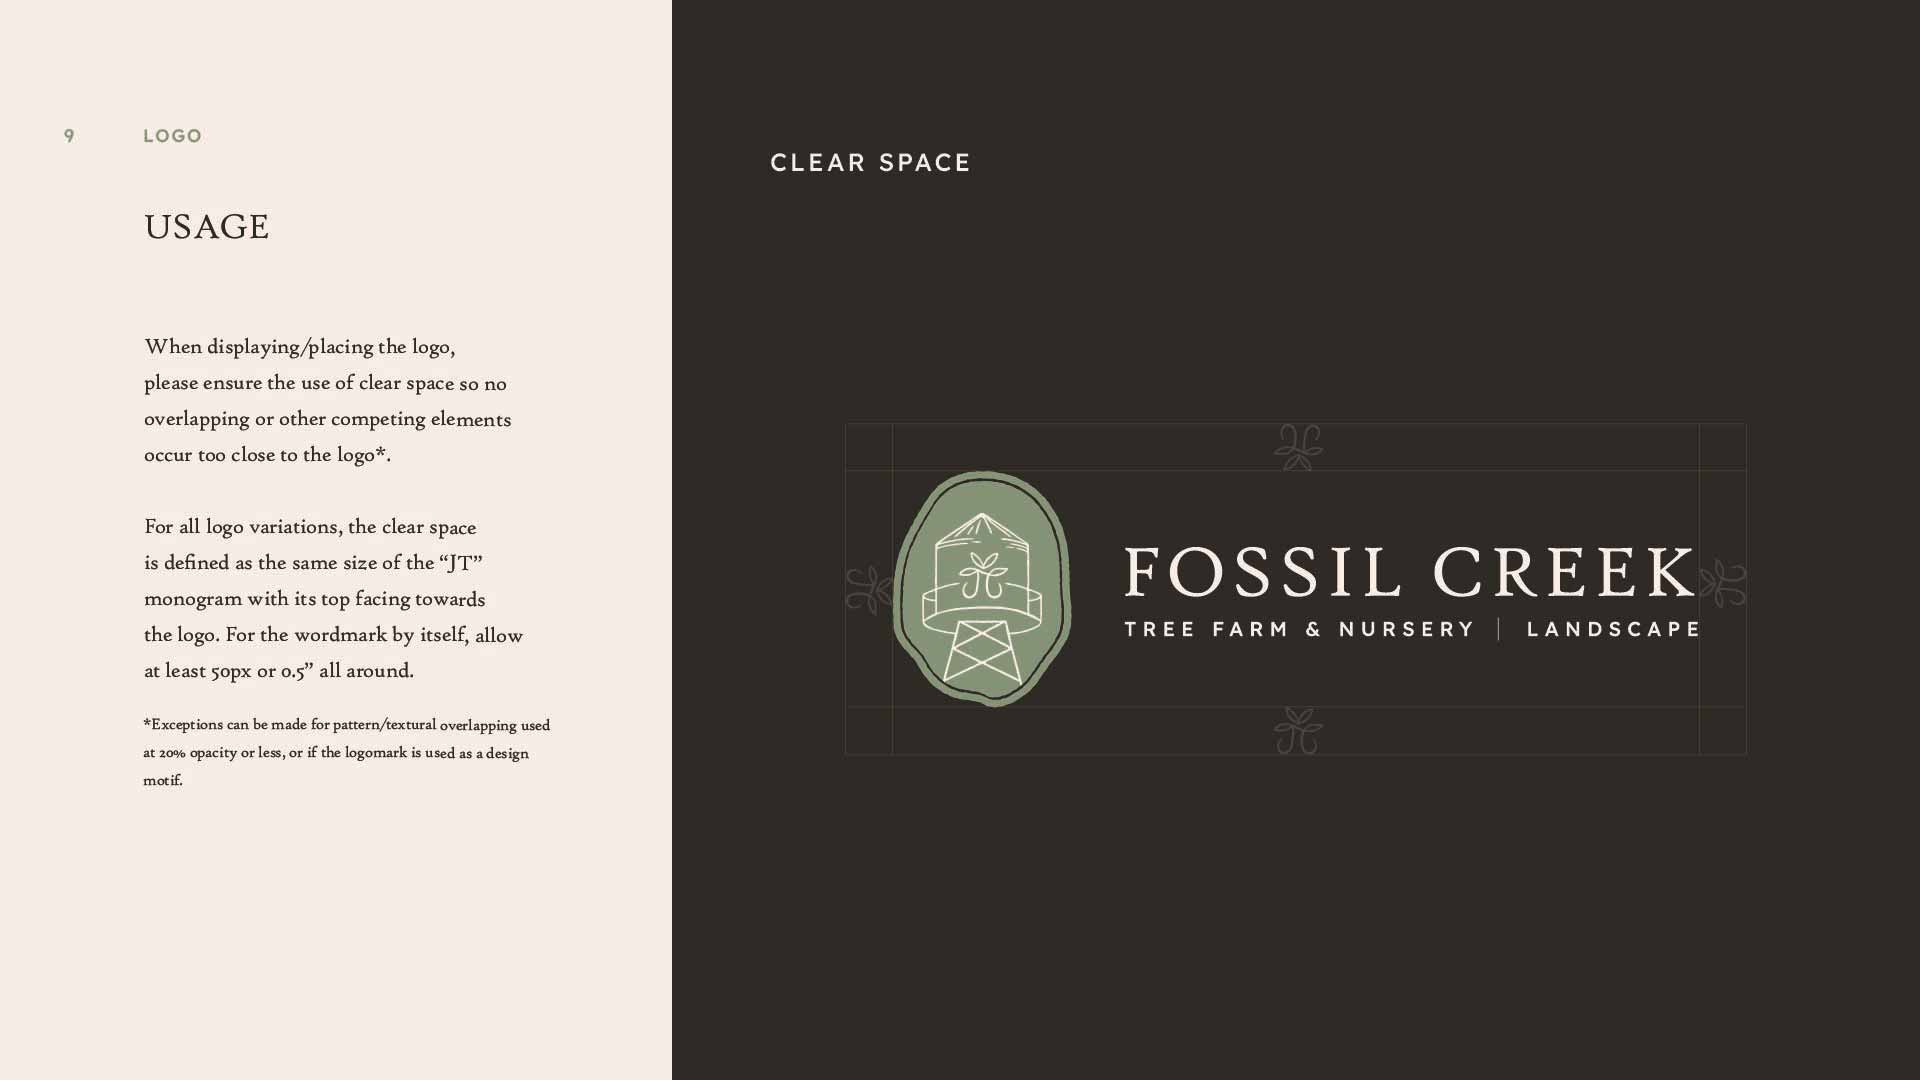 Fossil Creek Tree Farm brand design clear space standards